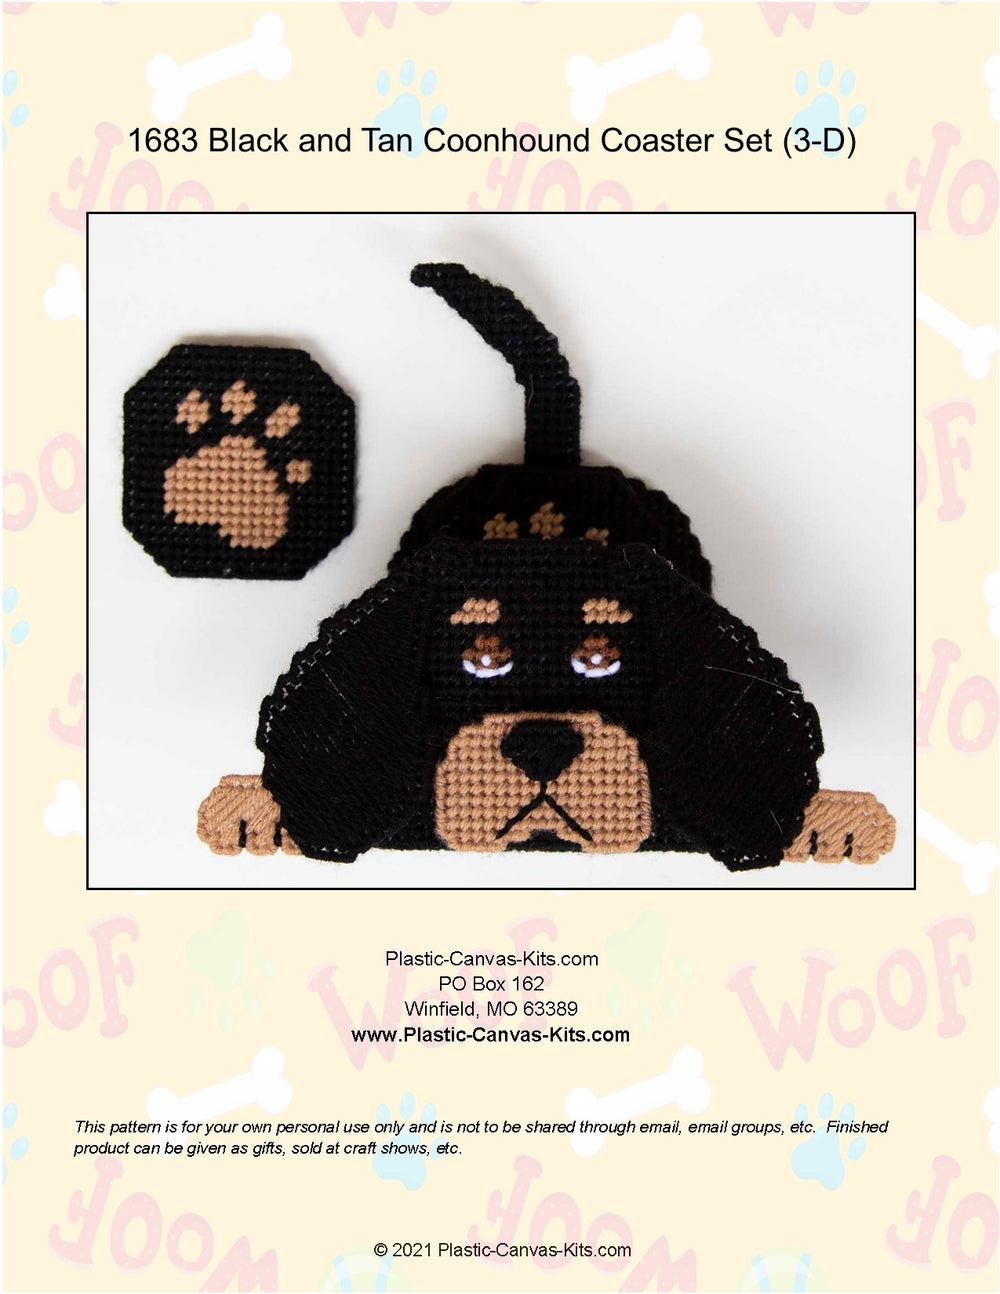 Black and Tan Coonhound 3-D Coaster Set